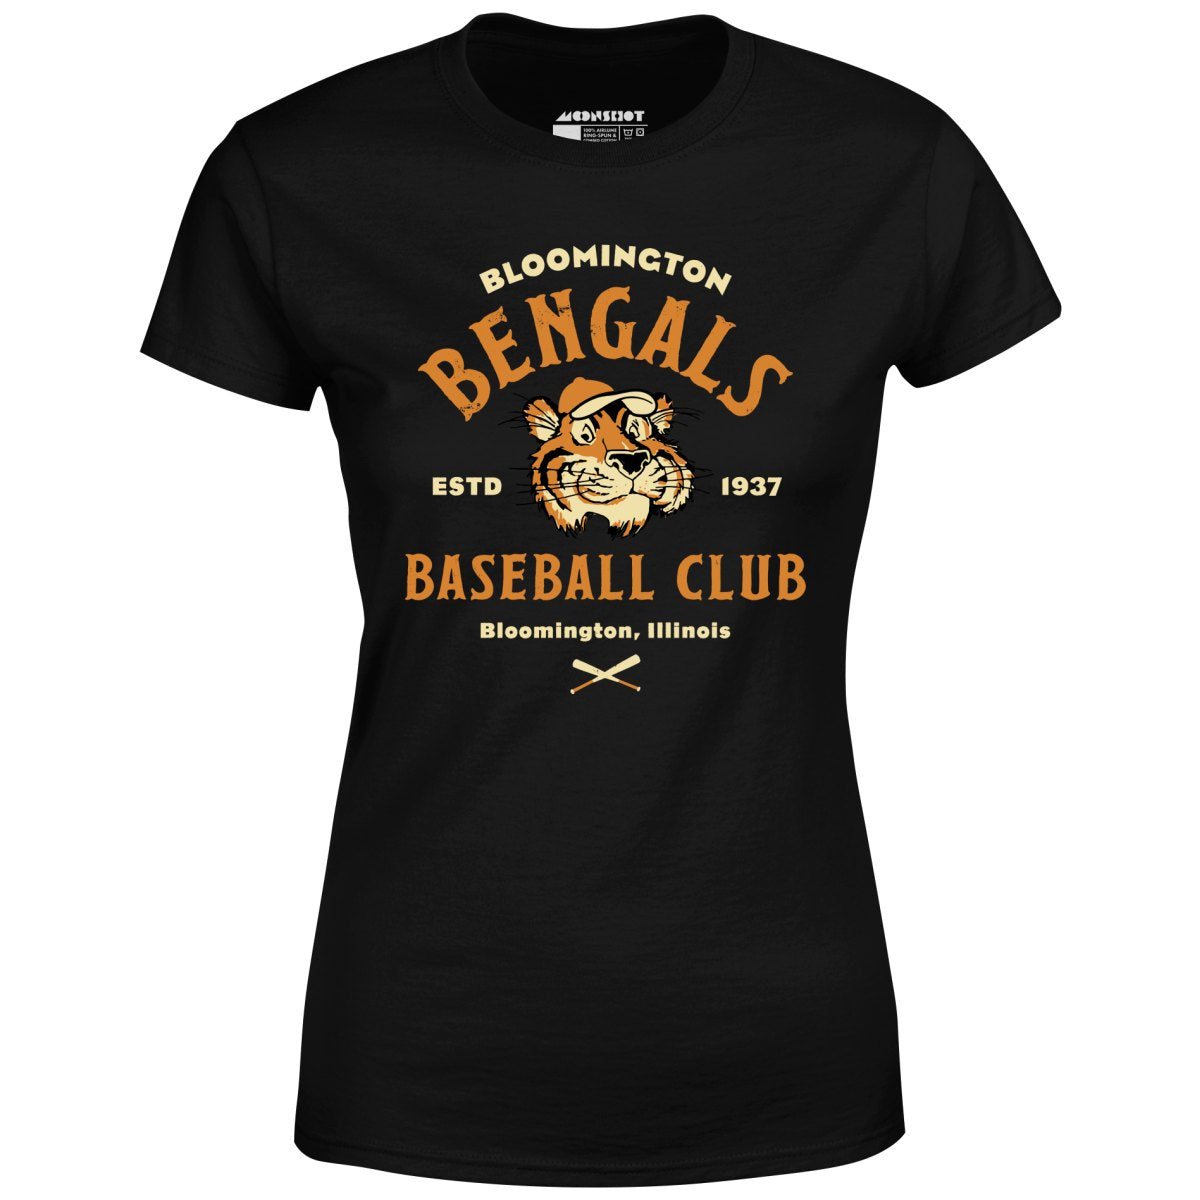 Bloomington Bengals - Illinois - Vintage Defunct Baseball Teams - Women's T-Shirt